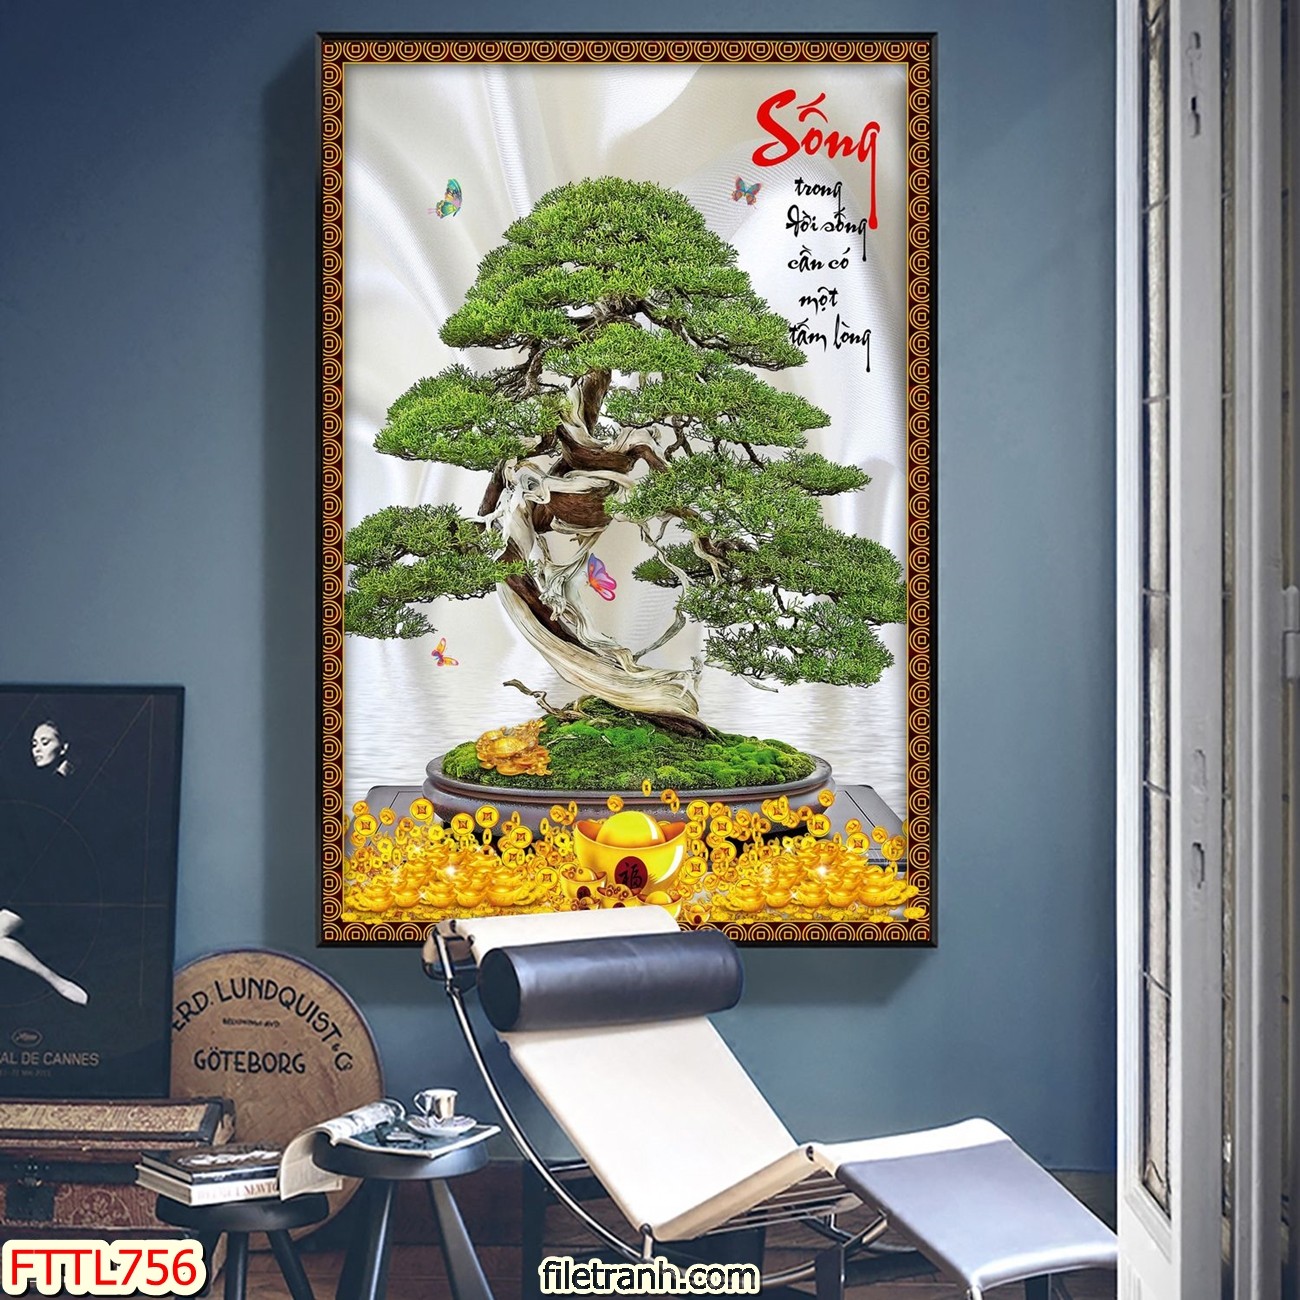 https://filetranh.com/file-tranh-chau-mai-bonsai/file-tranh-chau-mai-bonsai-fttl756.html